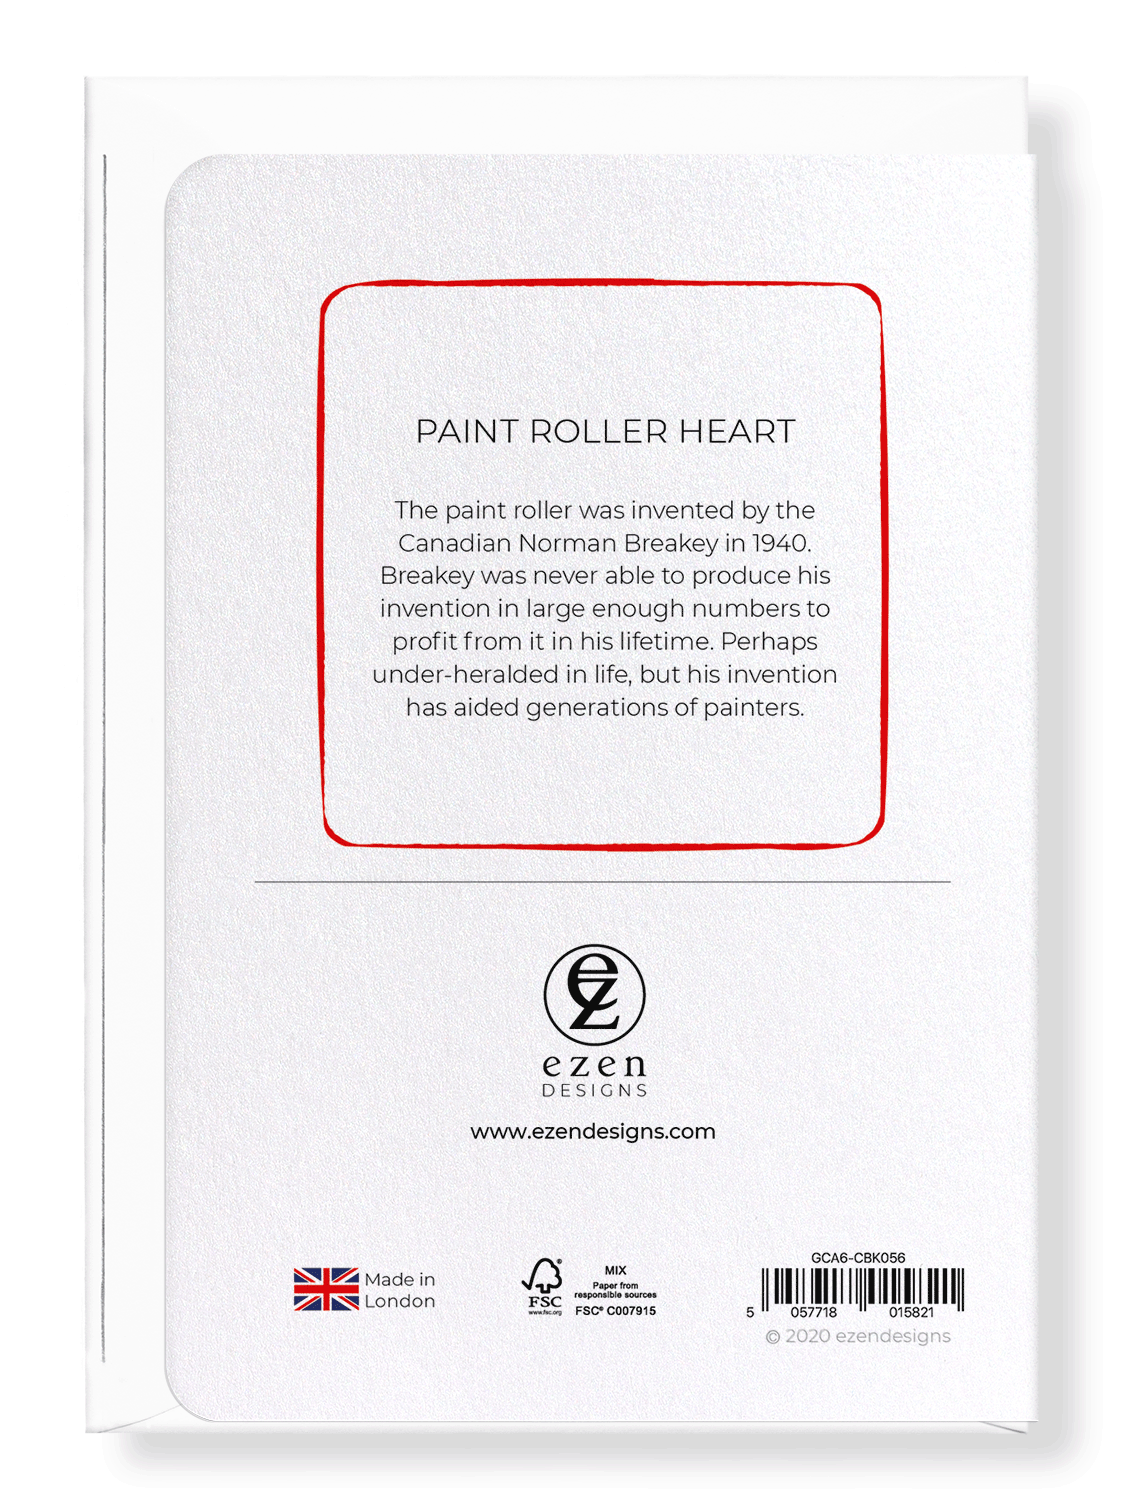 Ezen Designs - PAINT ROLLER HEART - Greeting Card - Back